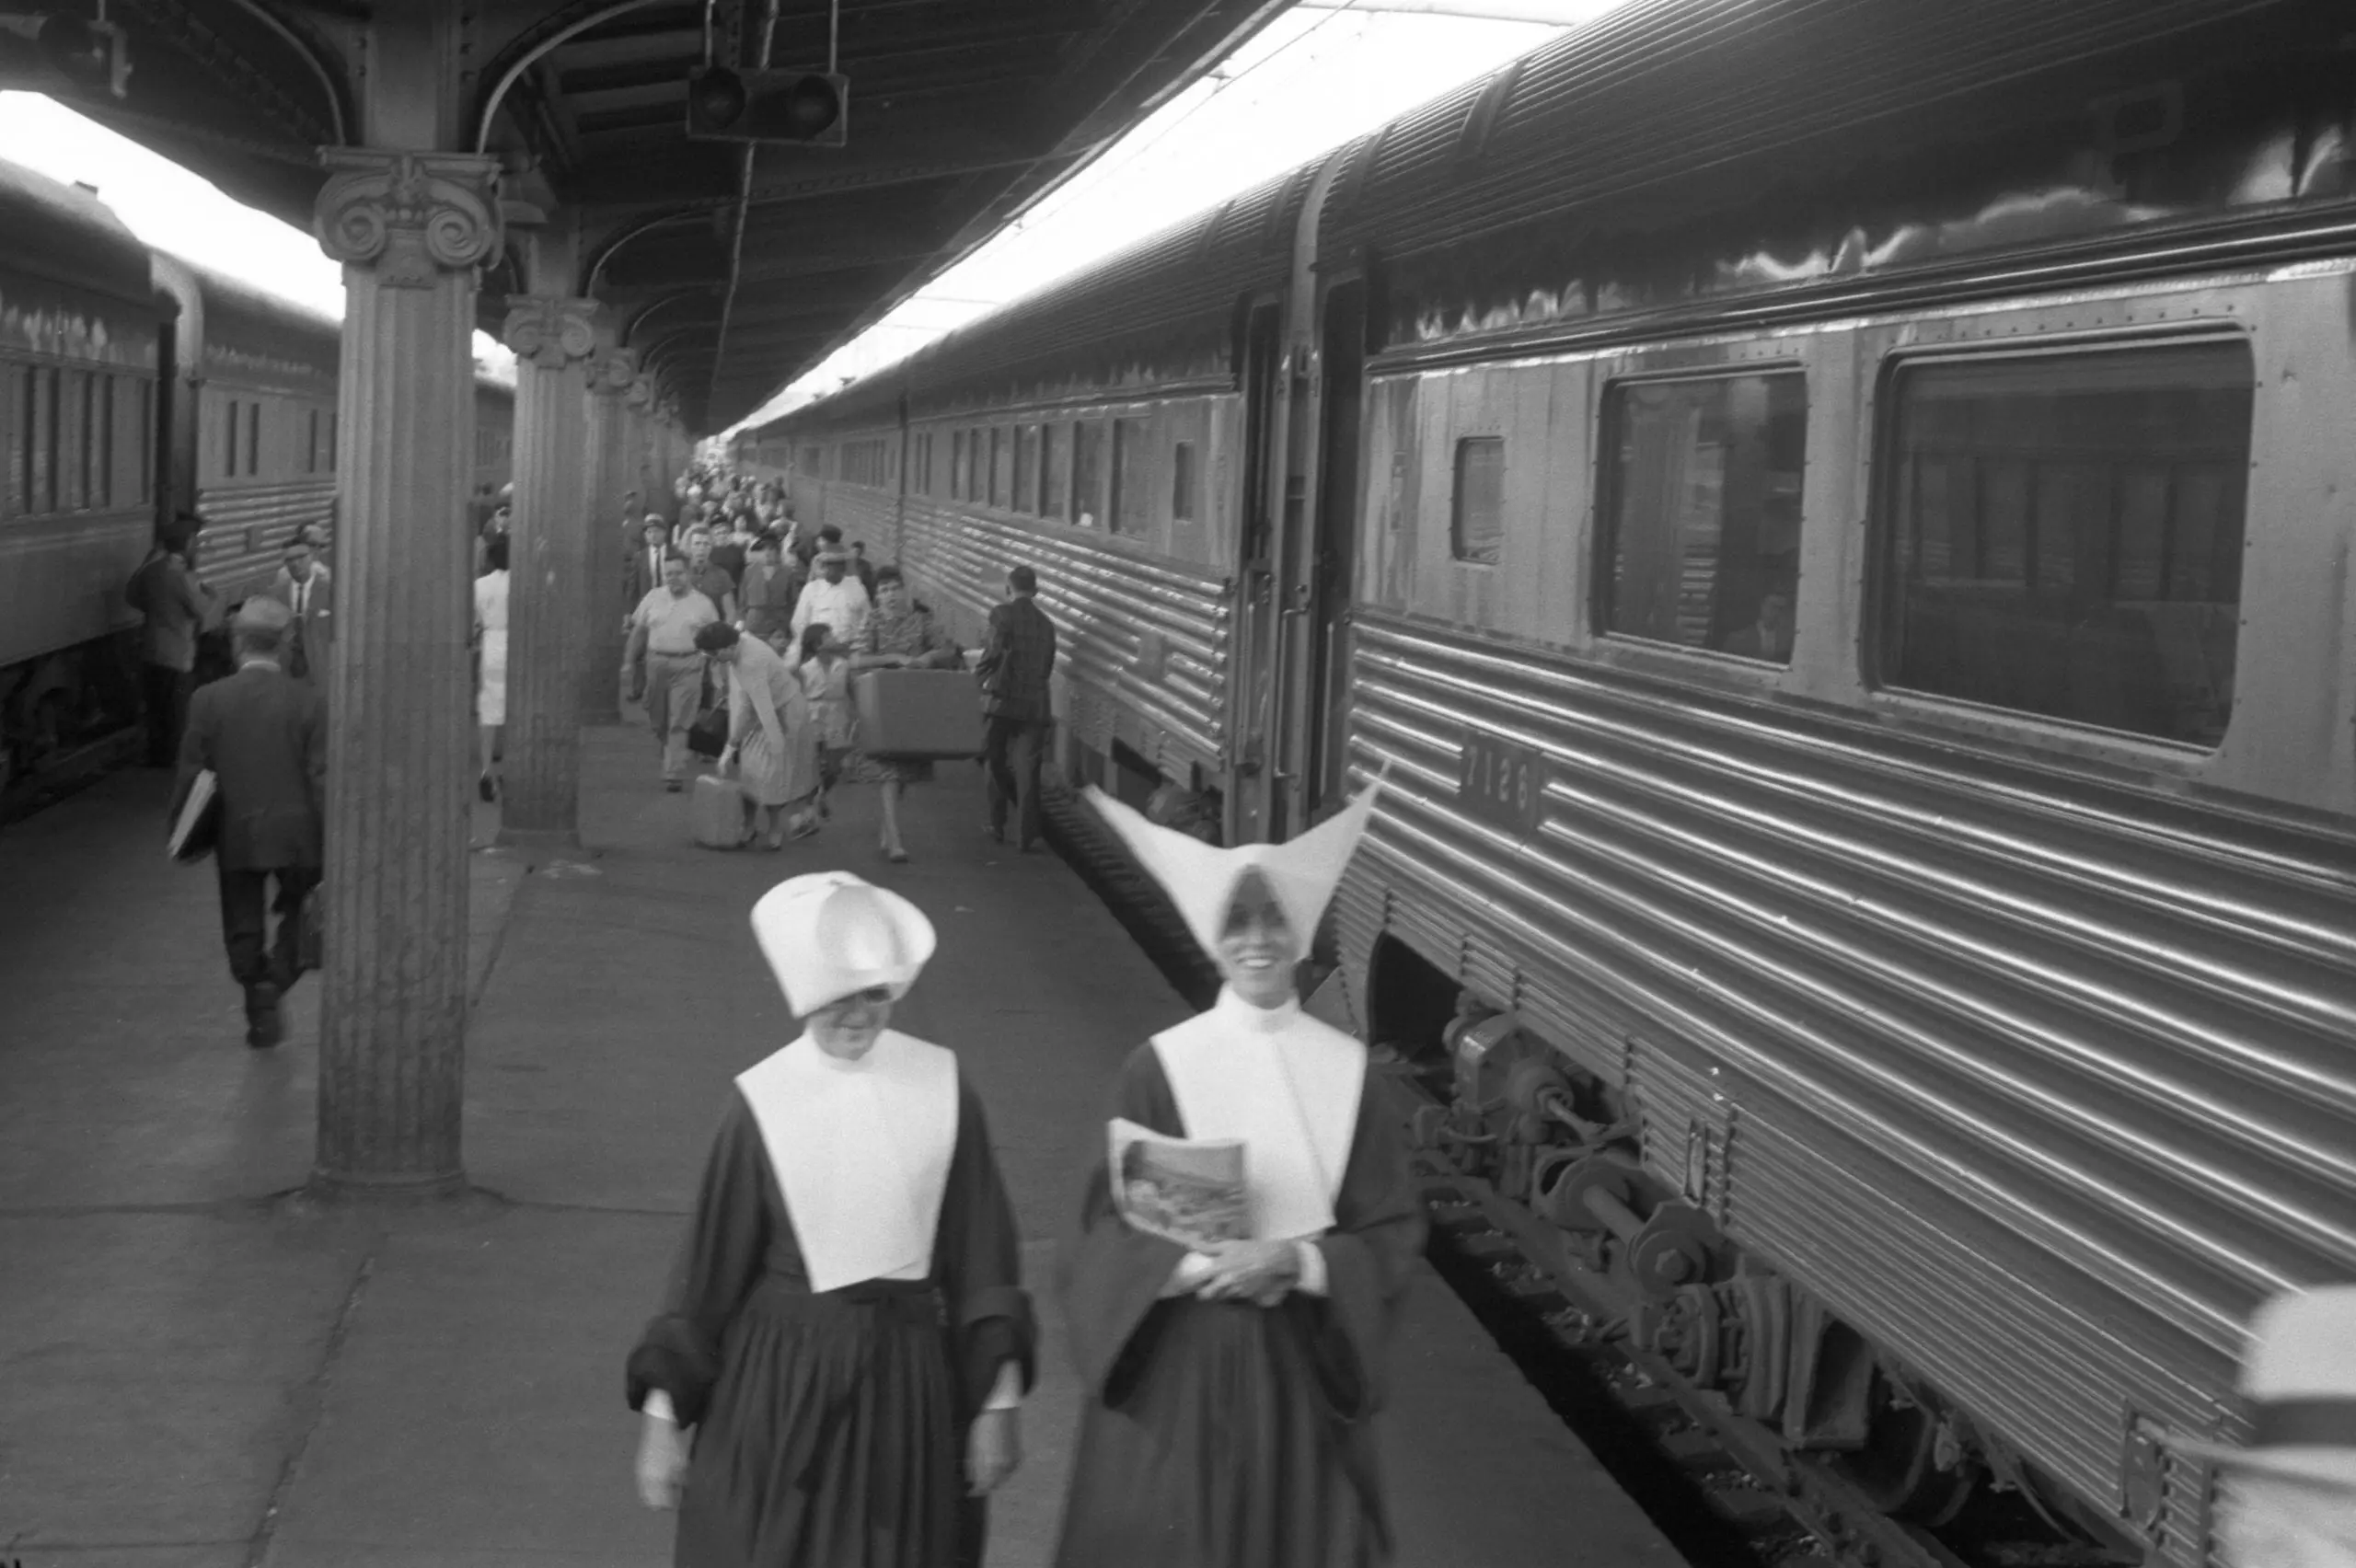 Passengers including nuns walking near trains, Union Station, Washington, D.C.